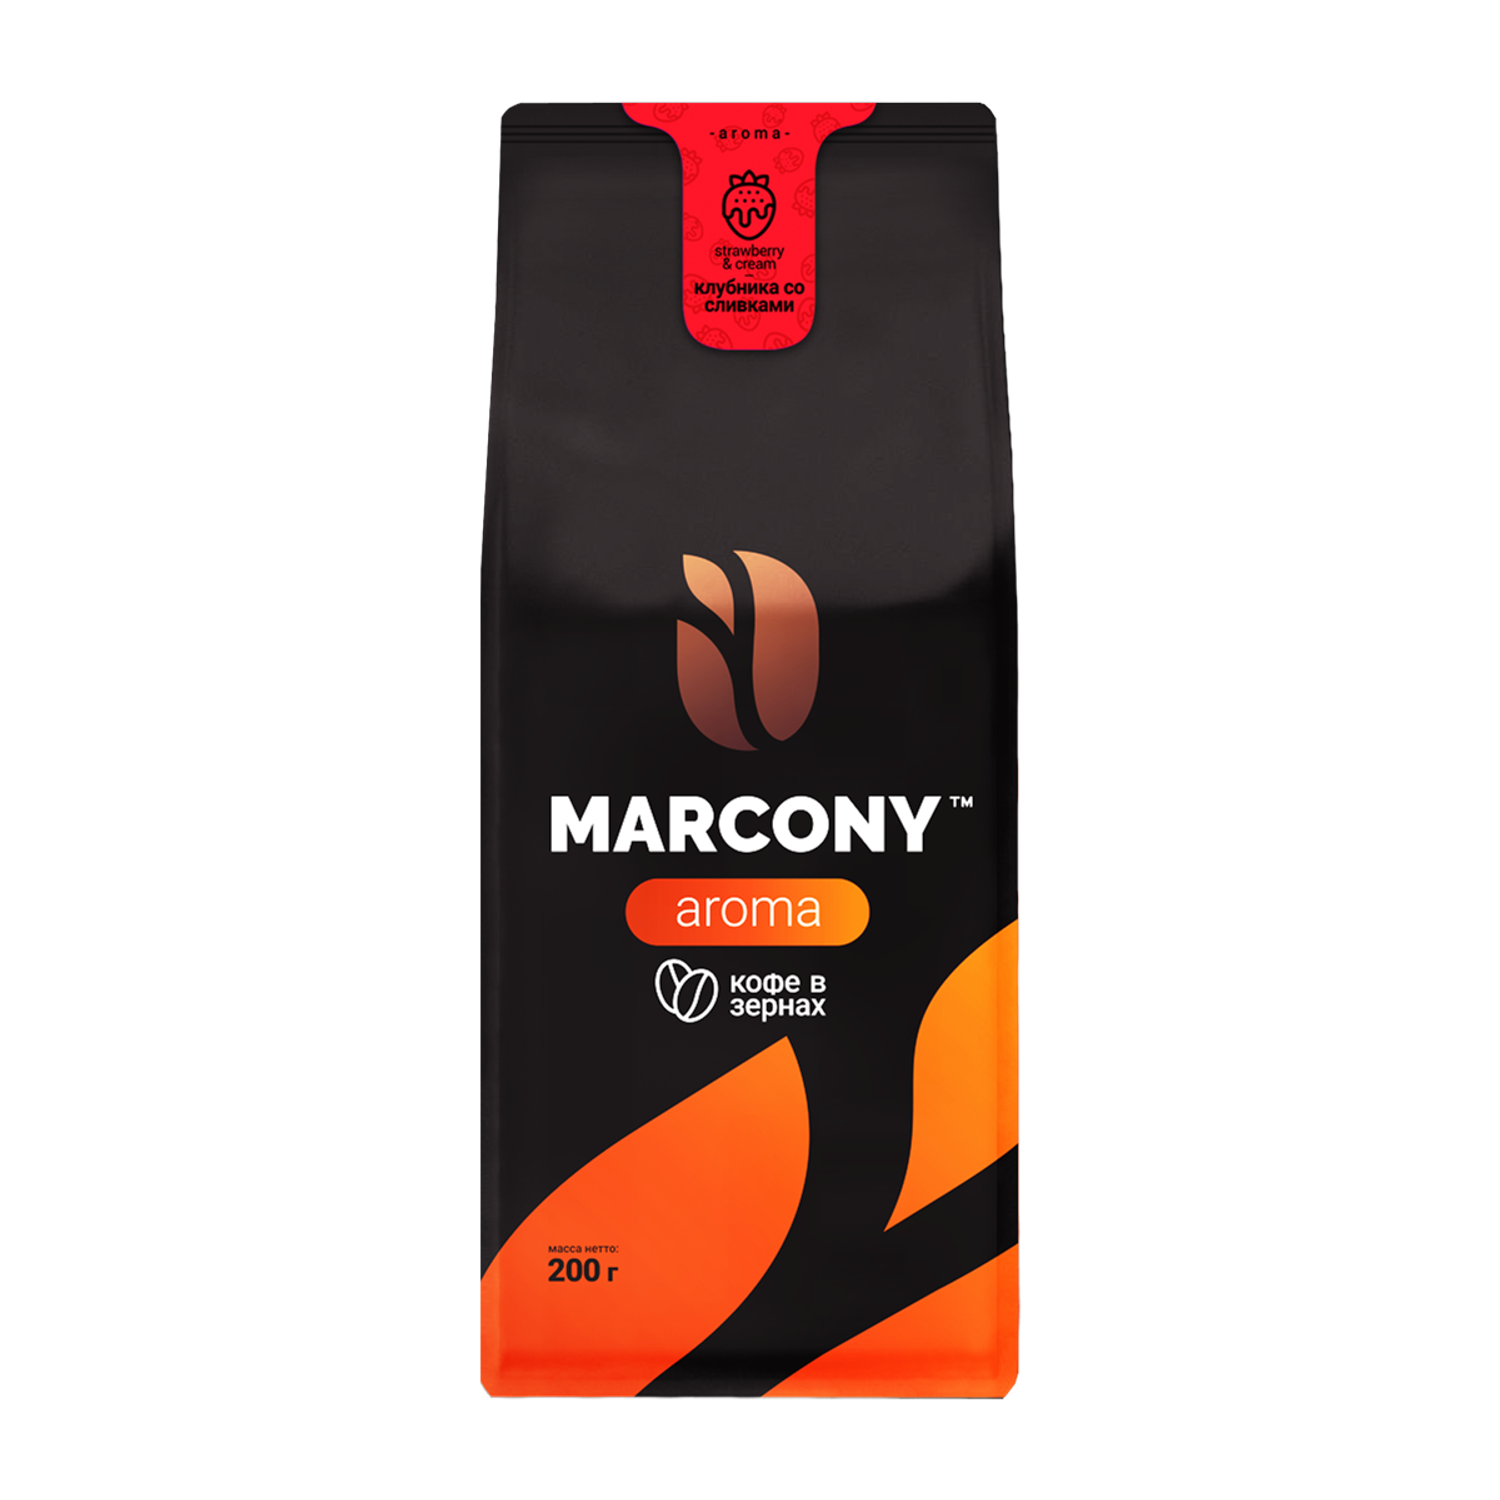 Кофе в зернах Marcony Aroma со вкусом Клубники со сливками 200 г - фото 1